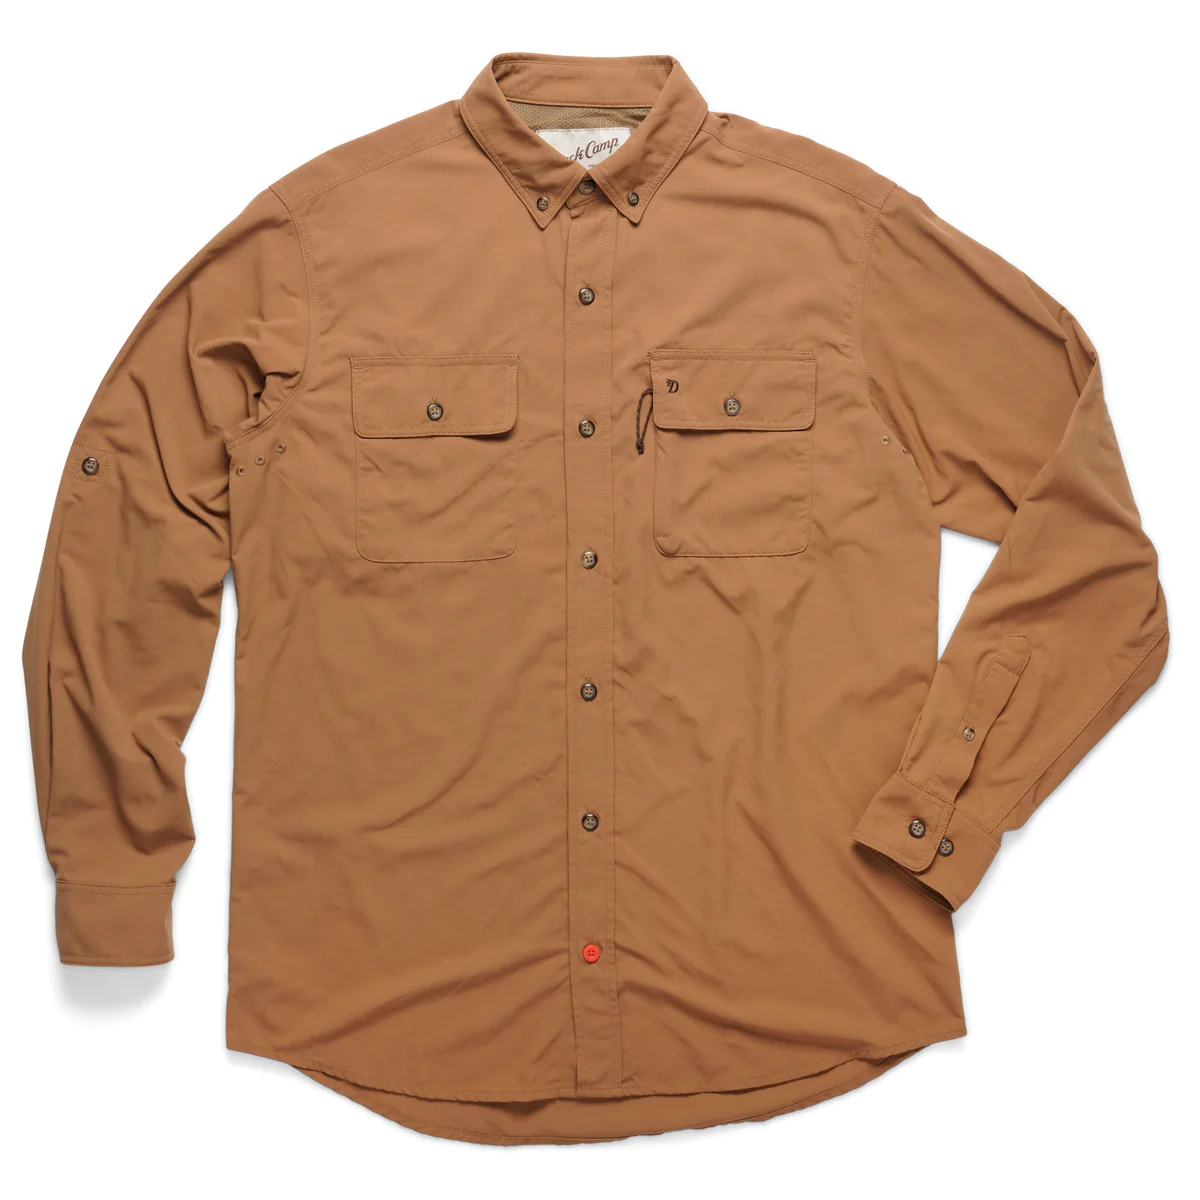 Lightweight Hunting Shirt - Long Sleeve - Rivers & Glen Trading Co.